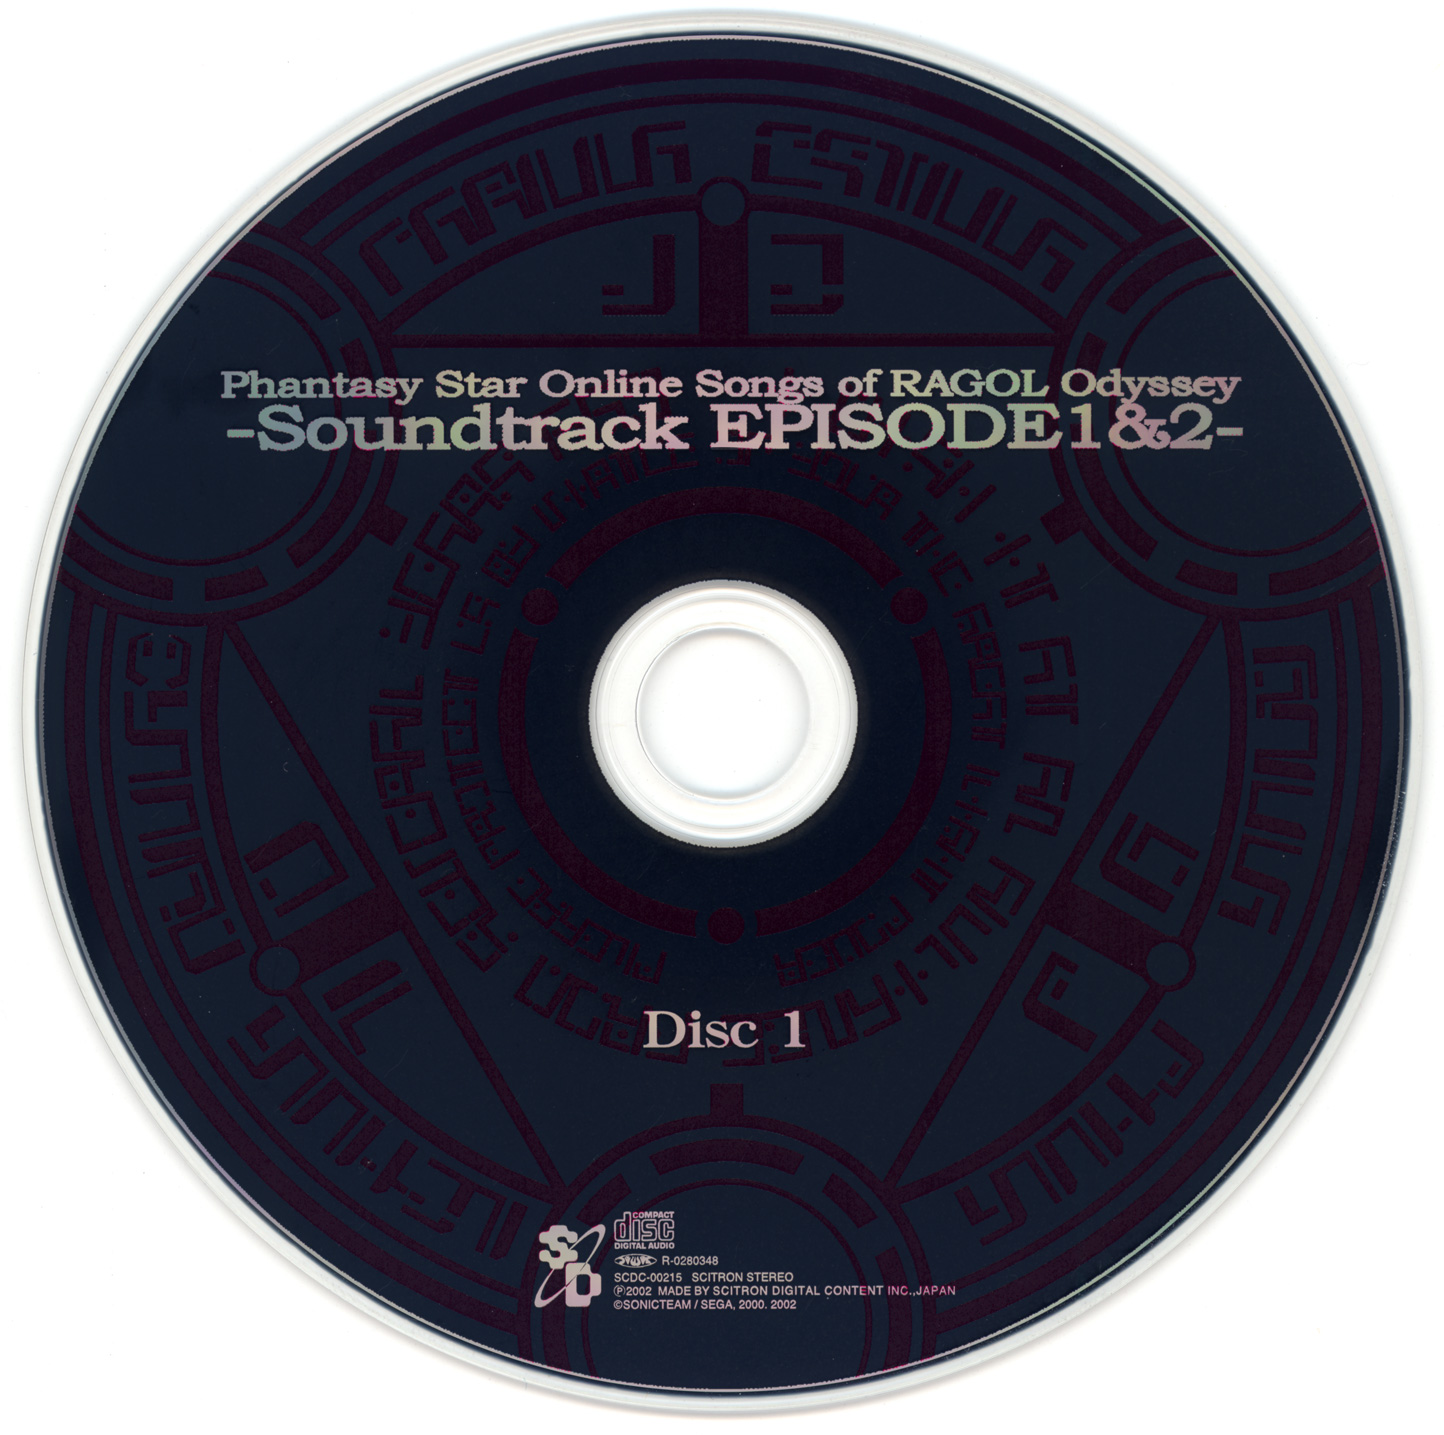 Phantasy Star Online Songs of RAGOL Odyssey -Soundtrack EPISODE 1u00262- (2002)  MP3 - Download Phantasy Star Online Songs of RAGOL Odyssey -Soundtrack  EPISODE 1u00262- (2002) Soundtracks for FREE!